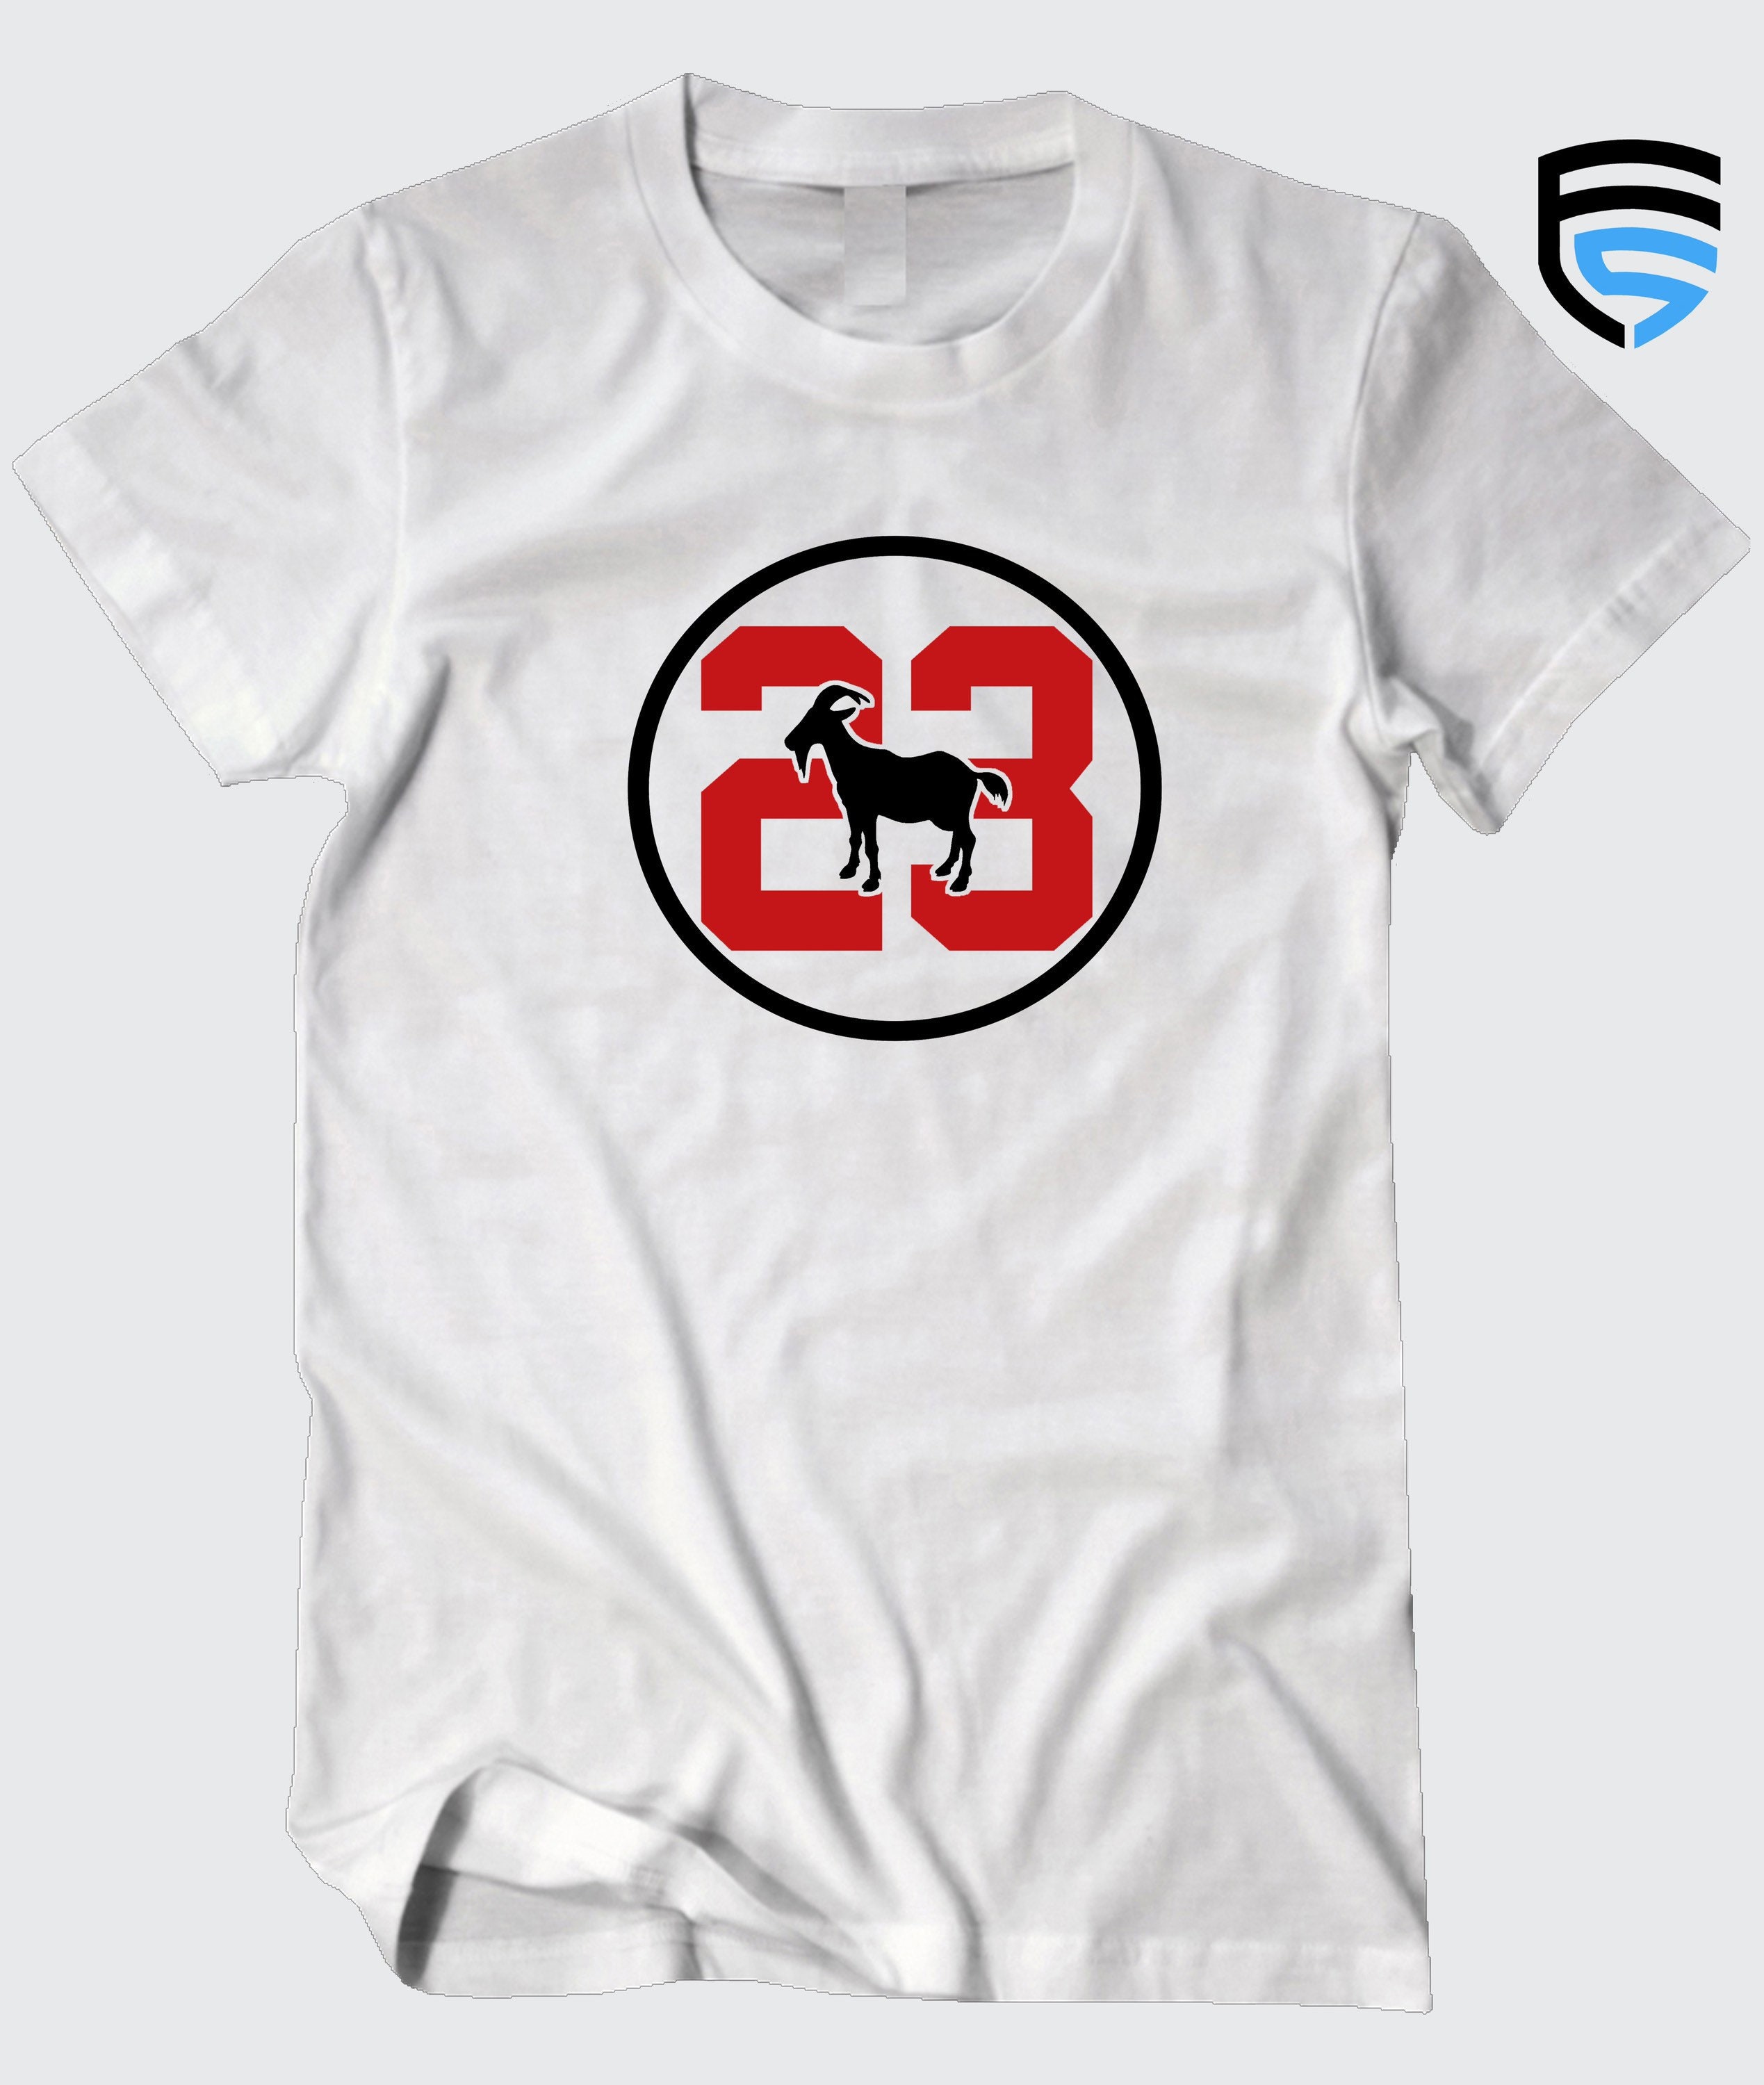 23 GOAT Chicago Basketball themed Soft Ringspun Pre-shrunk Cotton T-Shirt